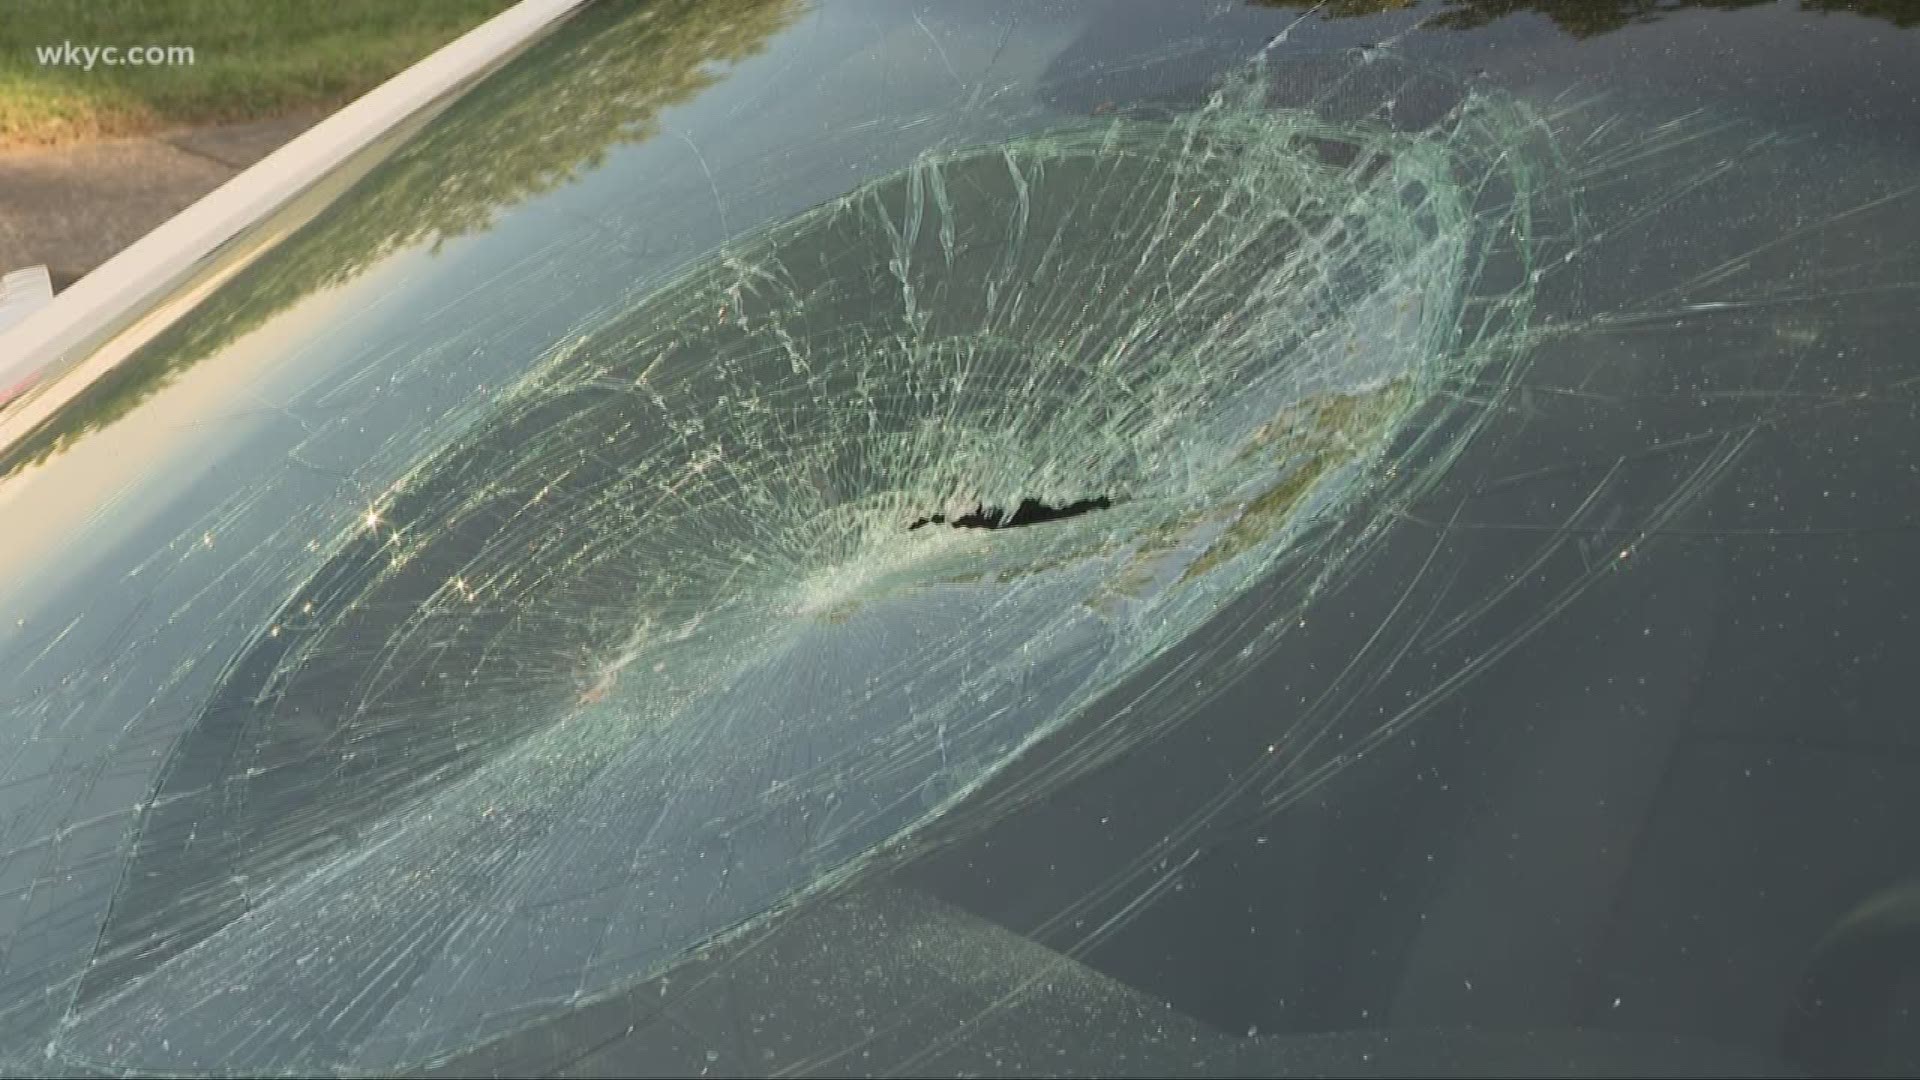 Vandals hit with rocks in North Ridgeville, WKYC's Dawn Kendrick reports.